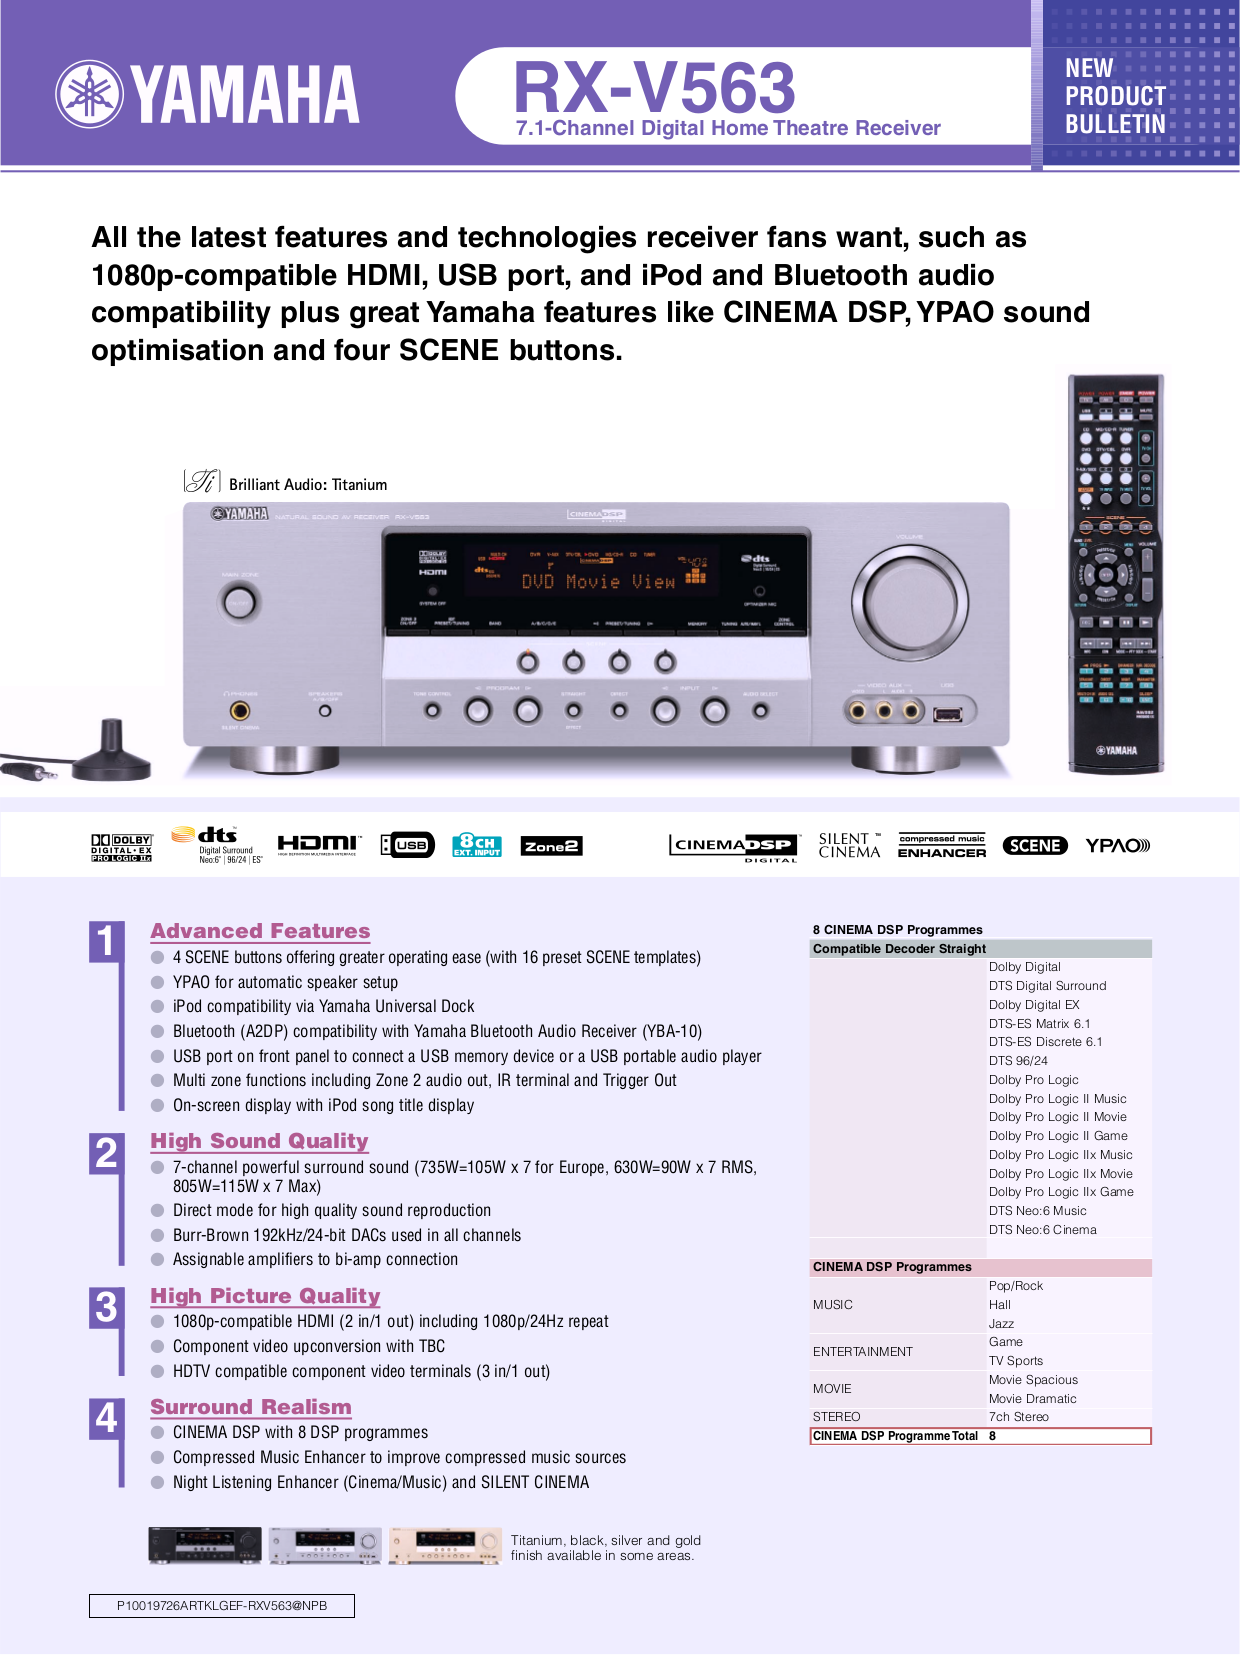 Download free pdf for Yamaha RX-V563 Receiver manual